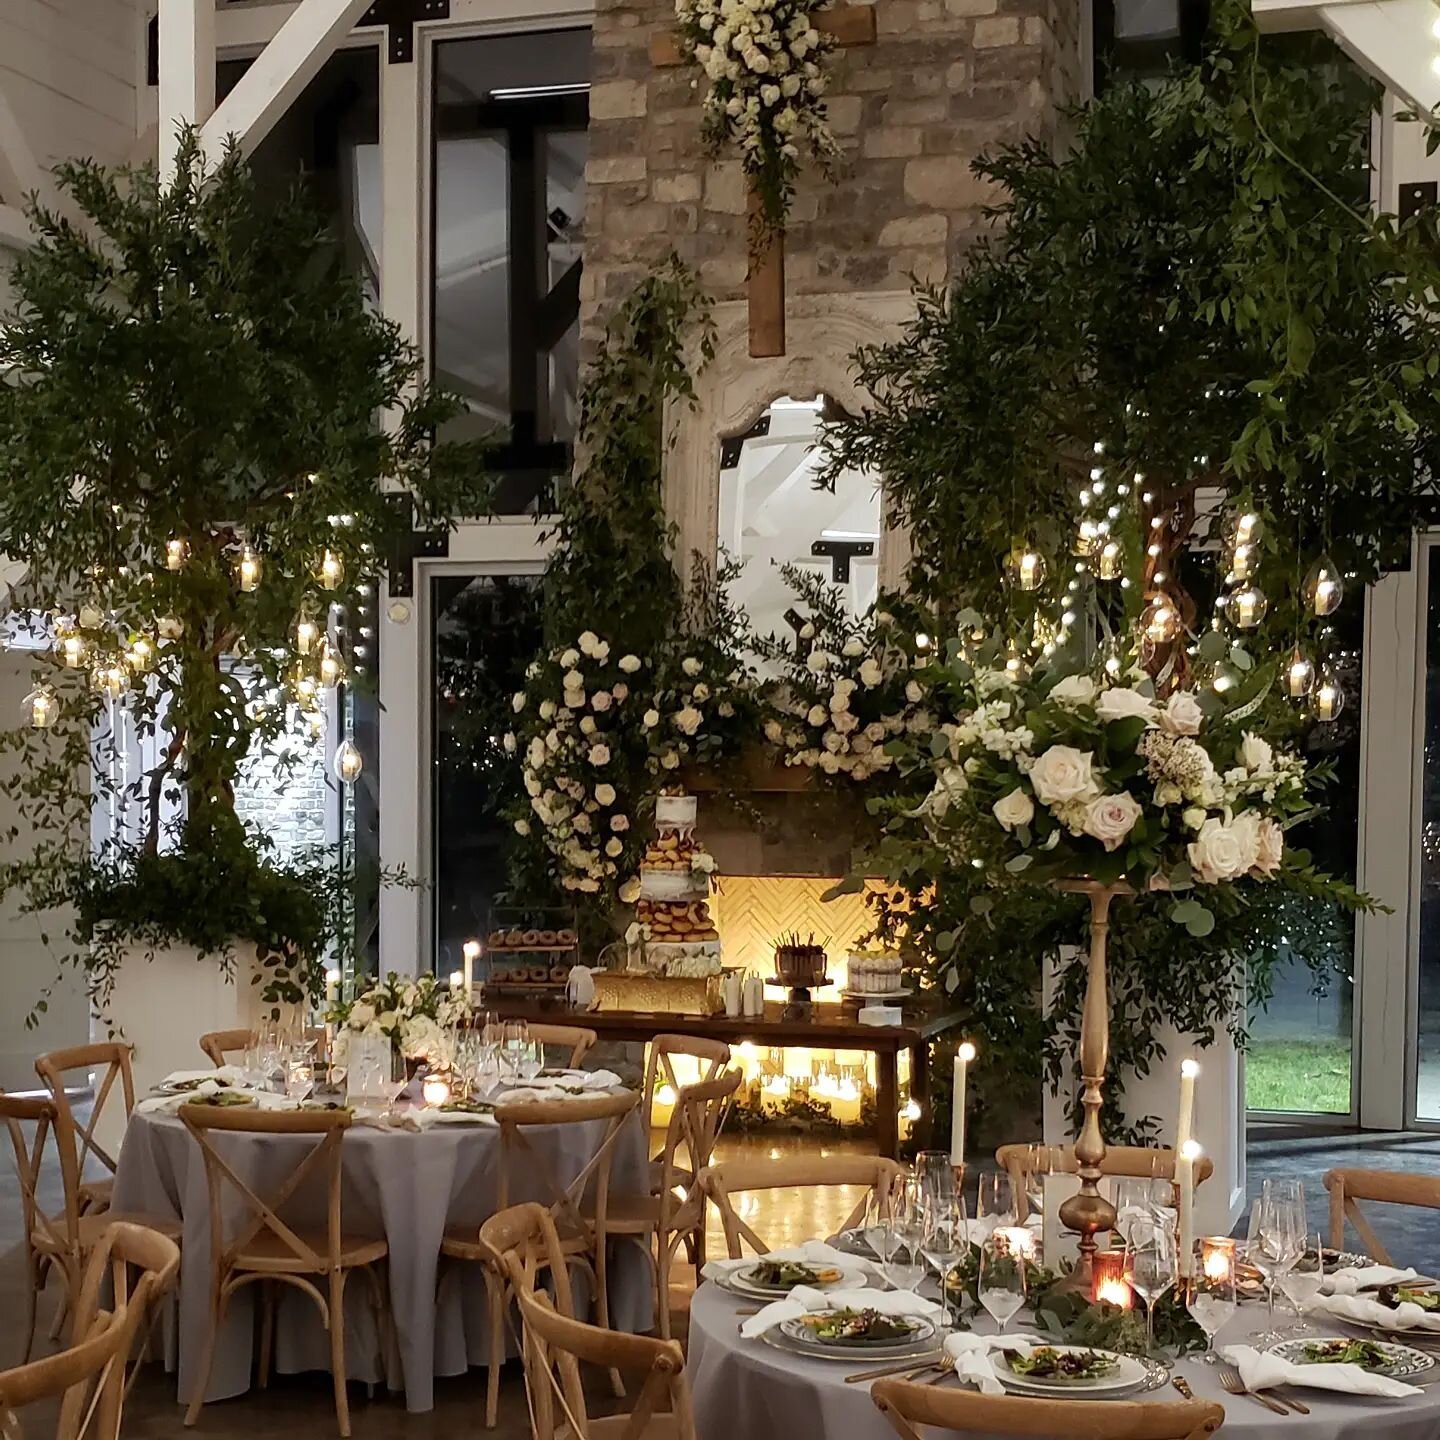 The Robinshaw Wedding Space